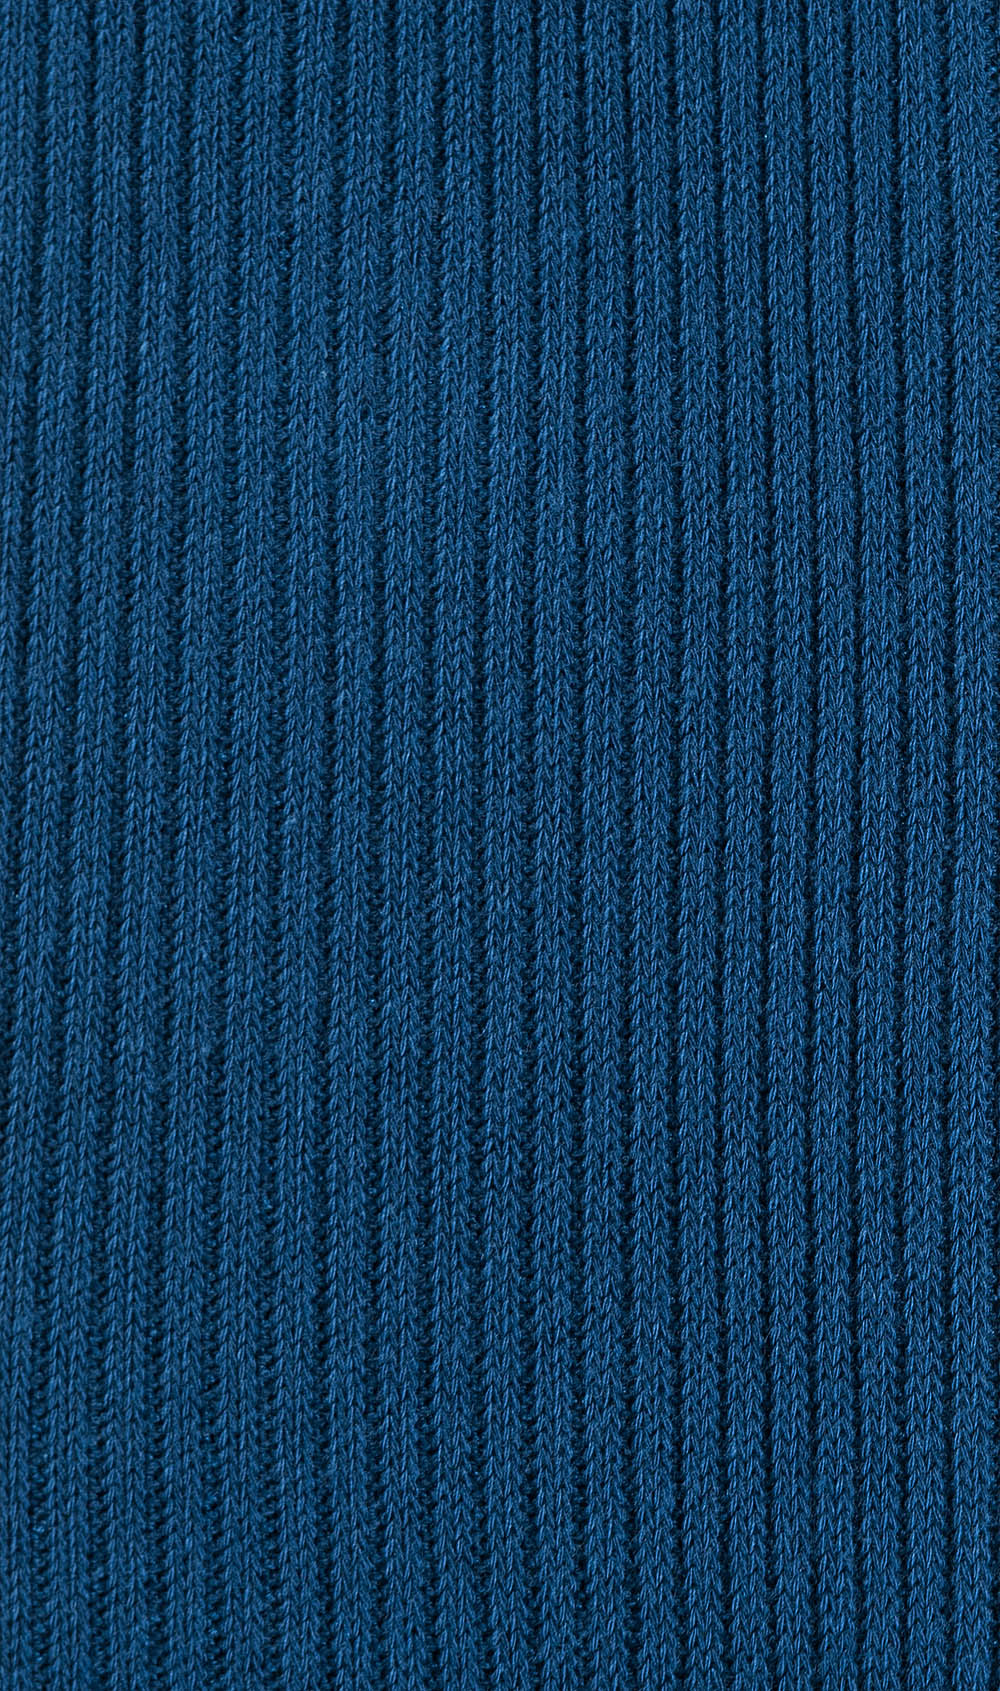 Marine Blue Ribbed Socks Pattern